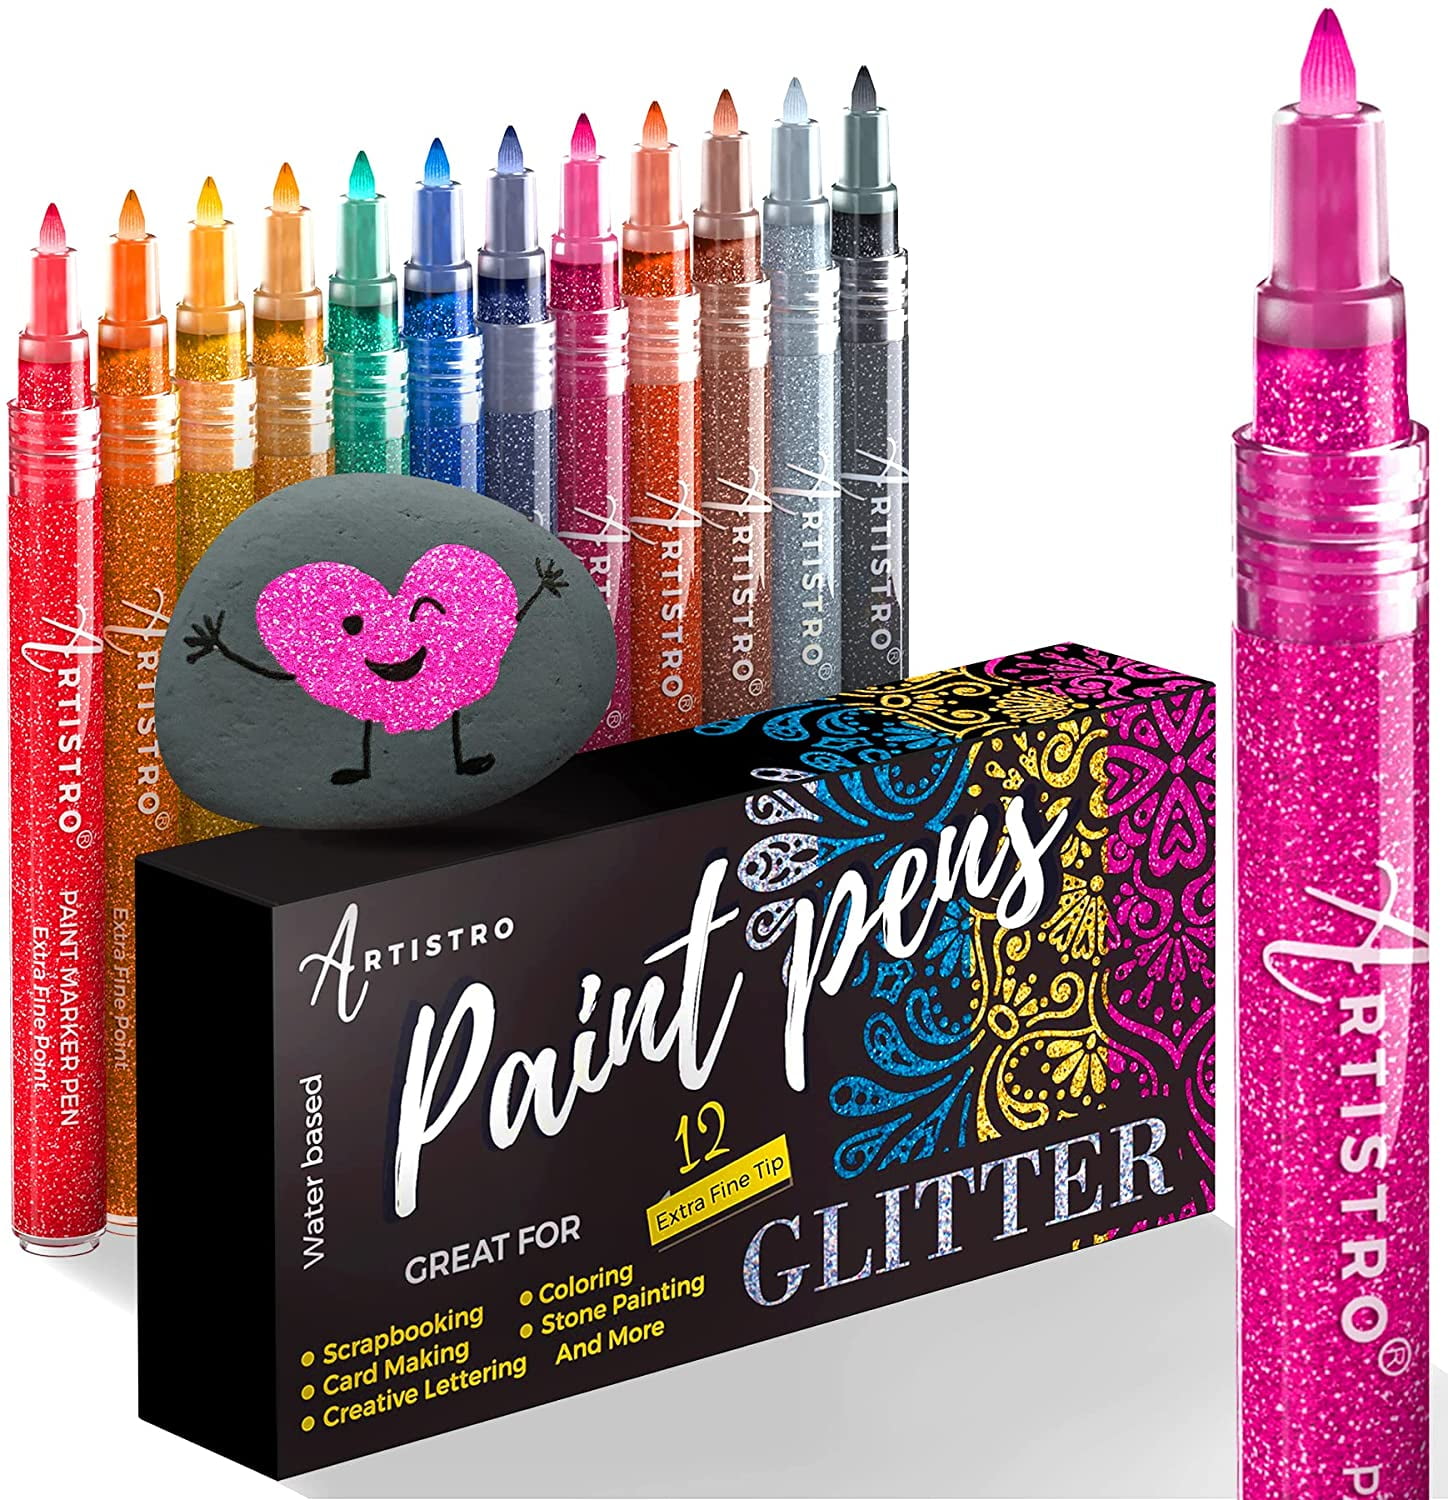 12 Assorted Metallic & Glitter Fabric Paint Pens For Fabric/T-Shirt/Clothes Art 